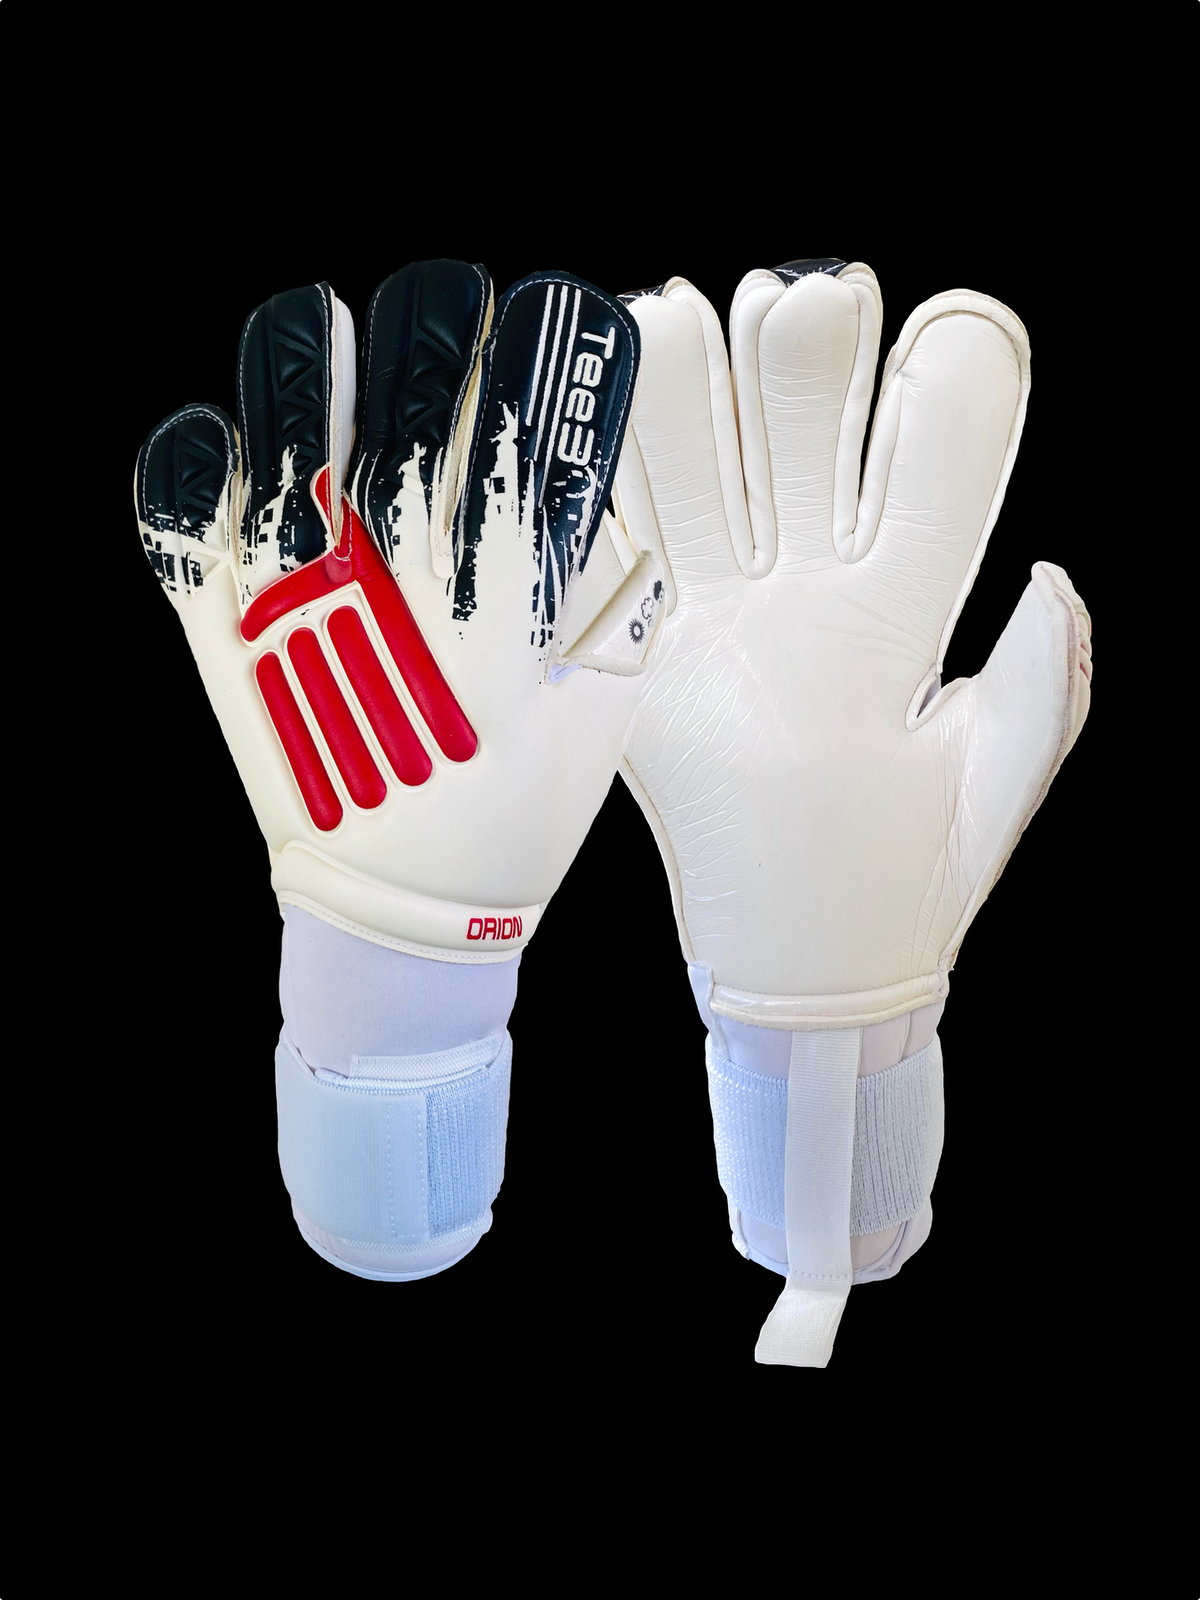 A negative cut goalkeeping glove worn by professional goalkeepers